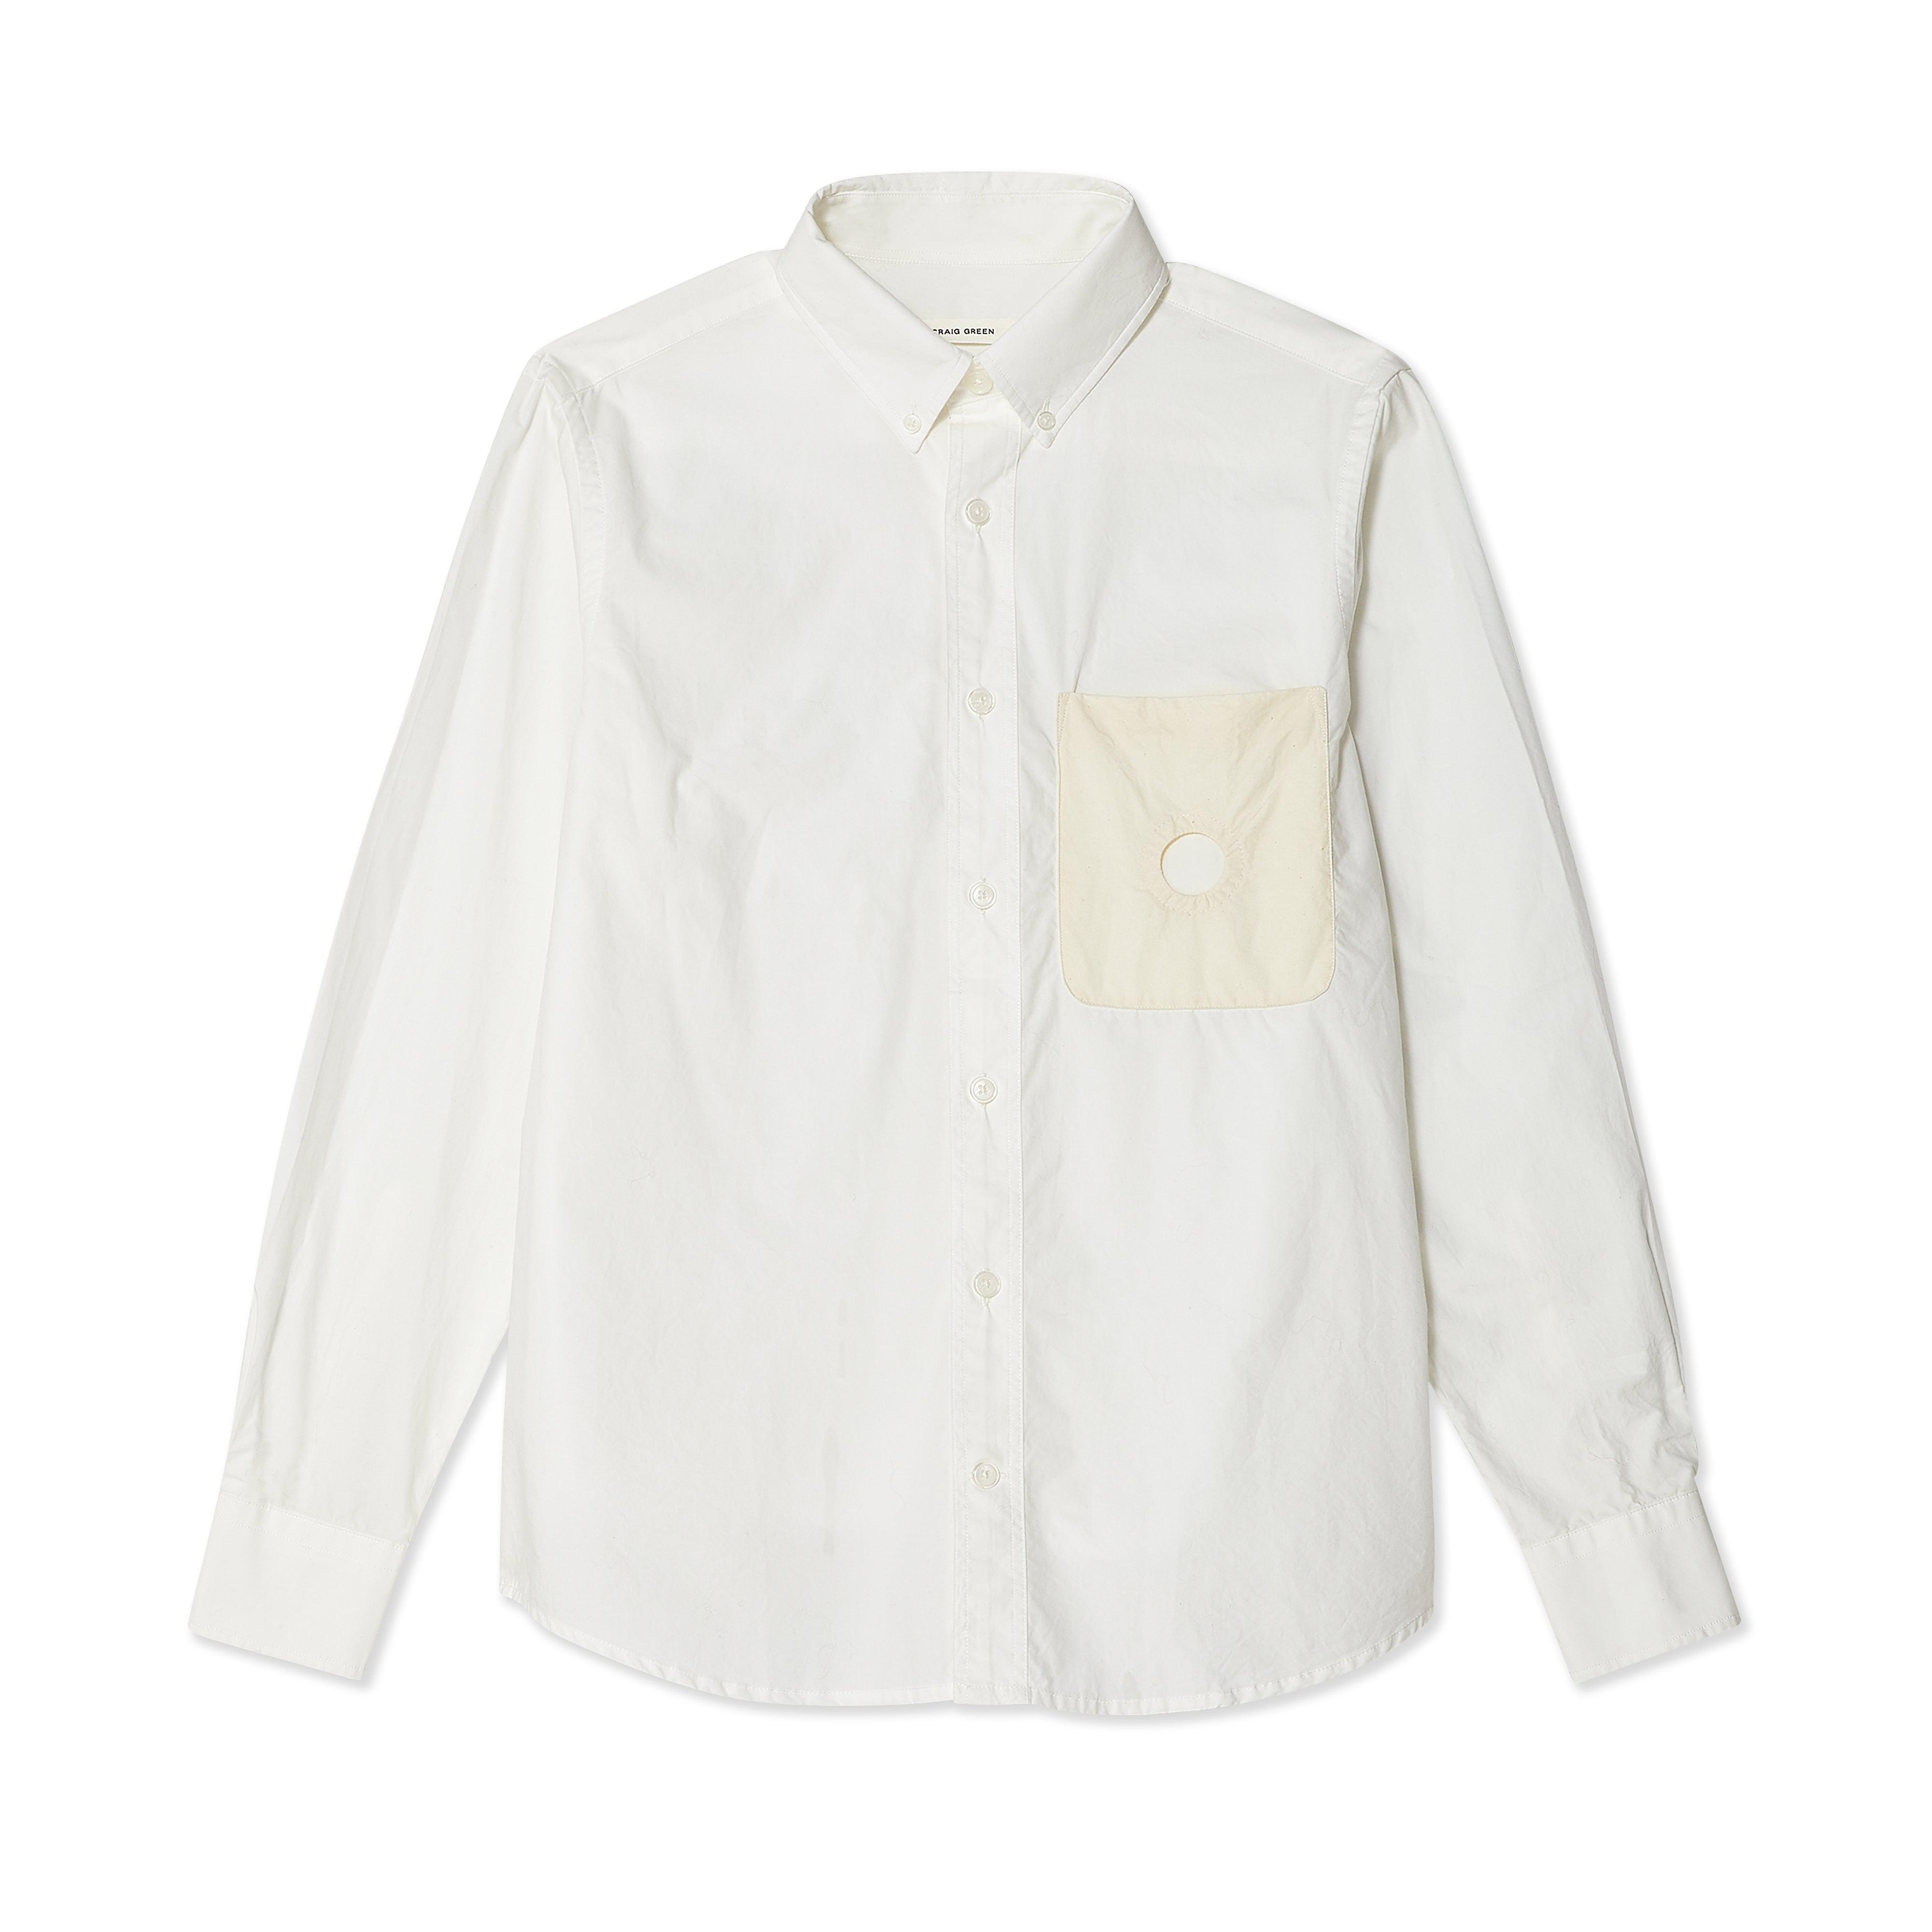 Craig Green Men's Uniform Shirt (White) by CGREEN